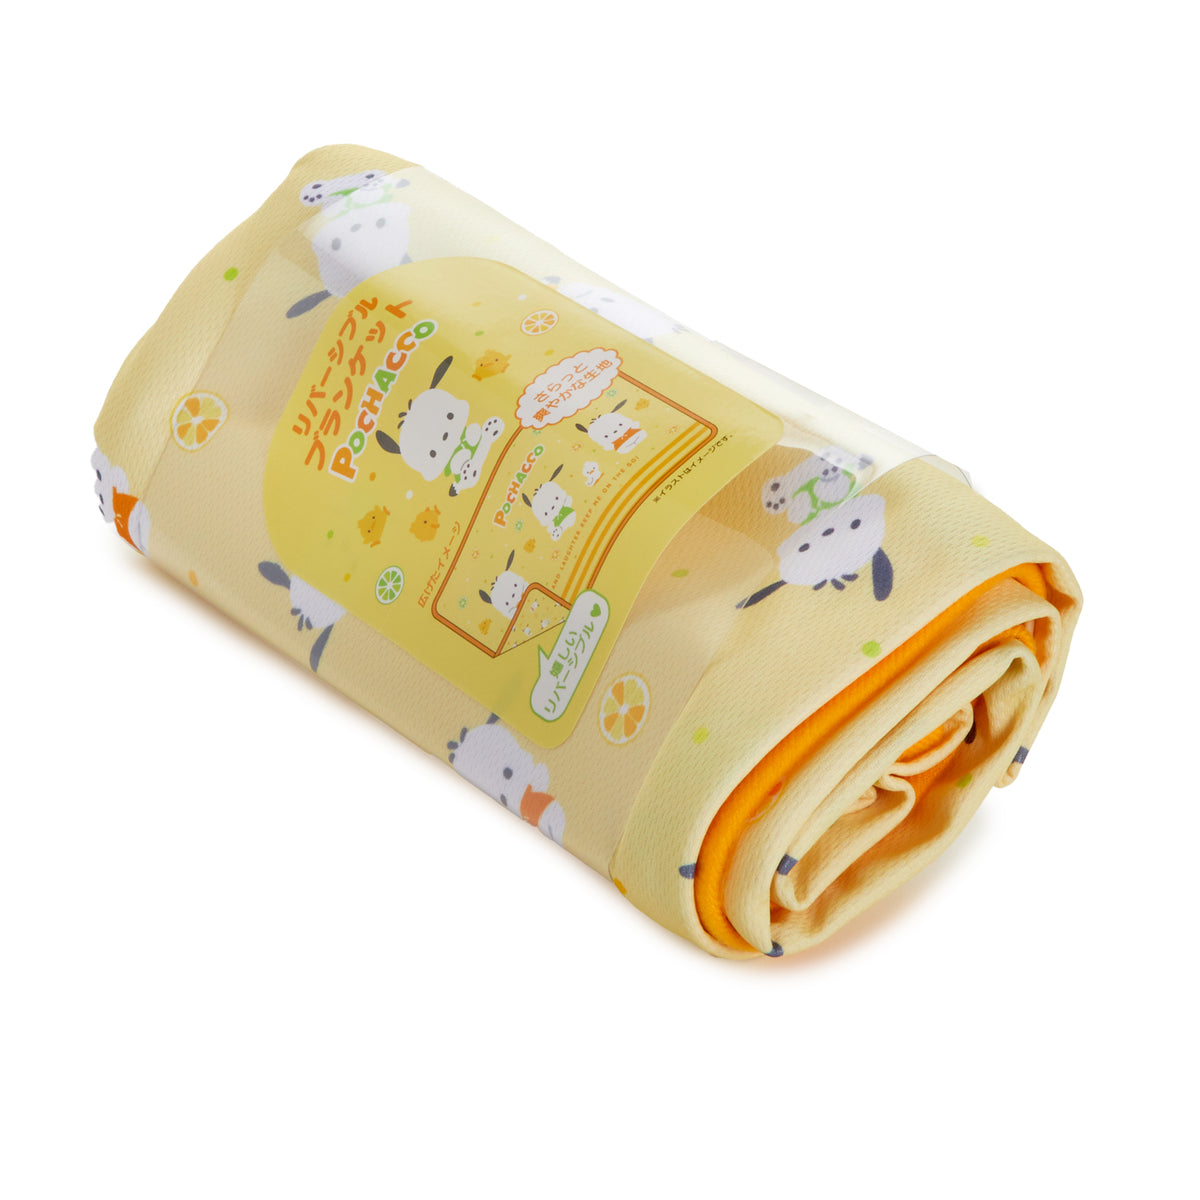 Pochacco Lap Blanket Home Goods Japan Original   